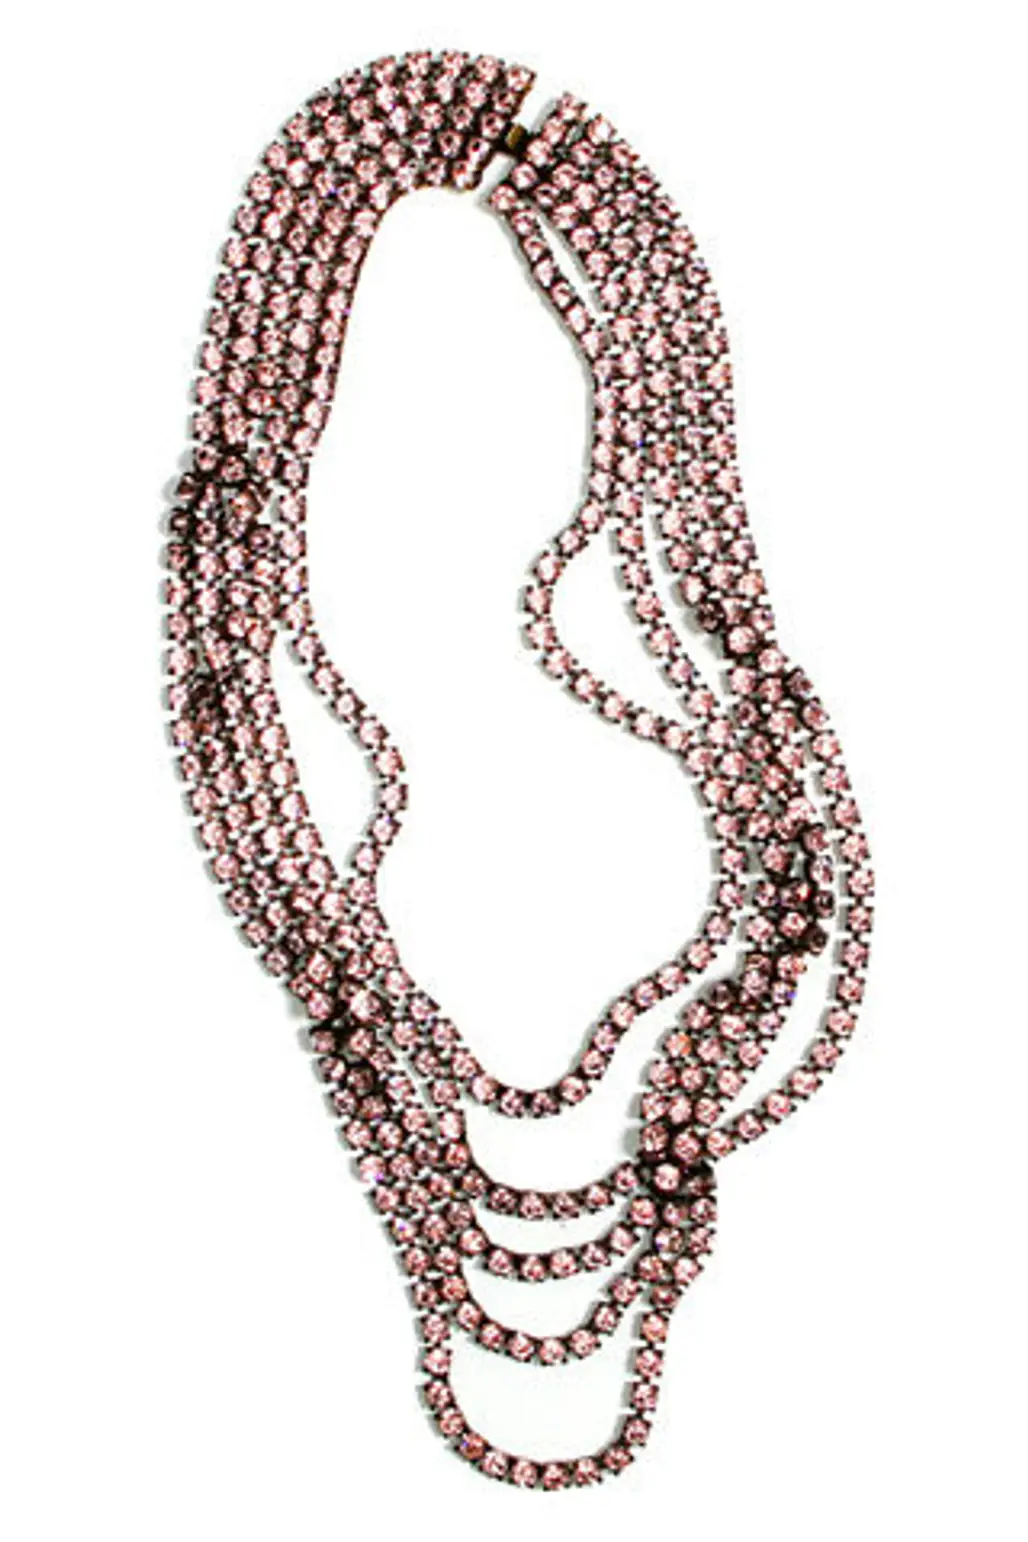 Janis by Janis Savitt. Crystal Necklace